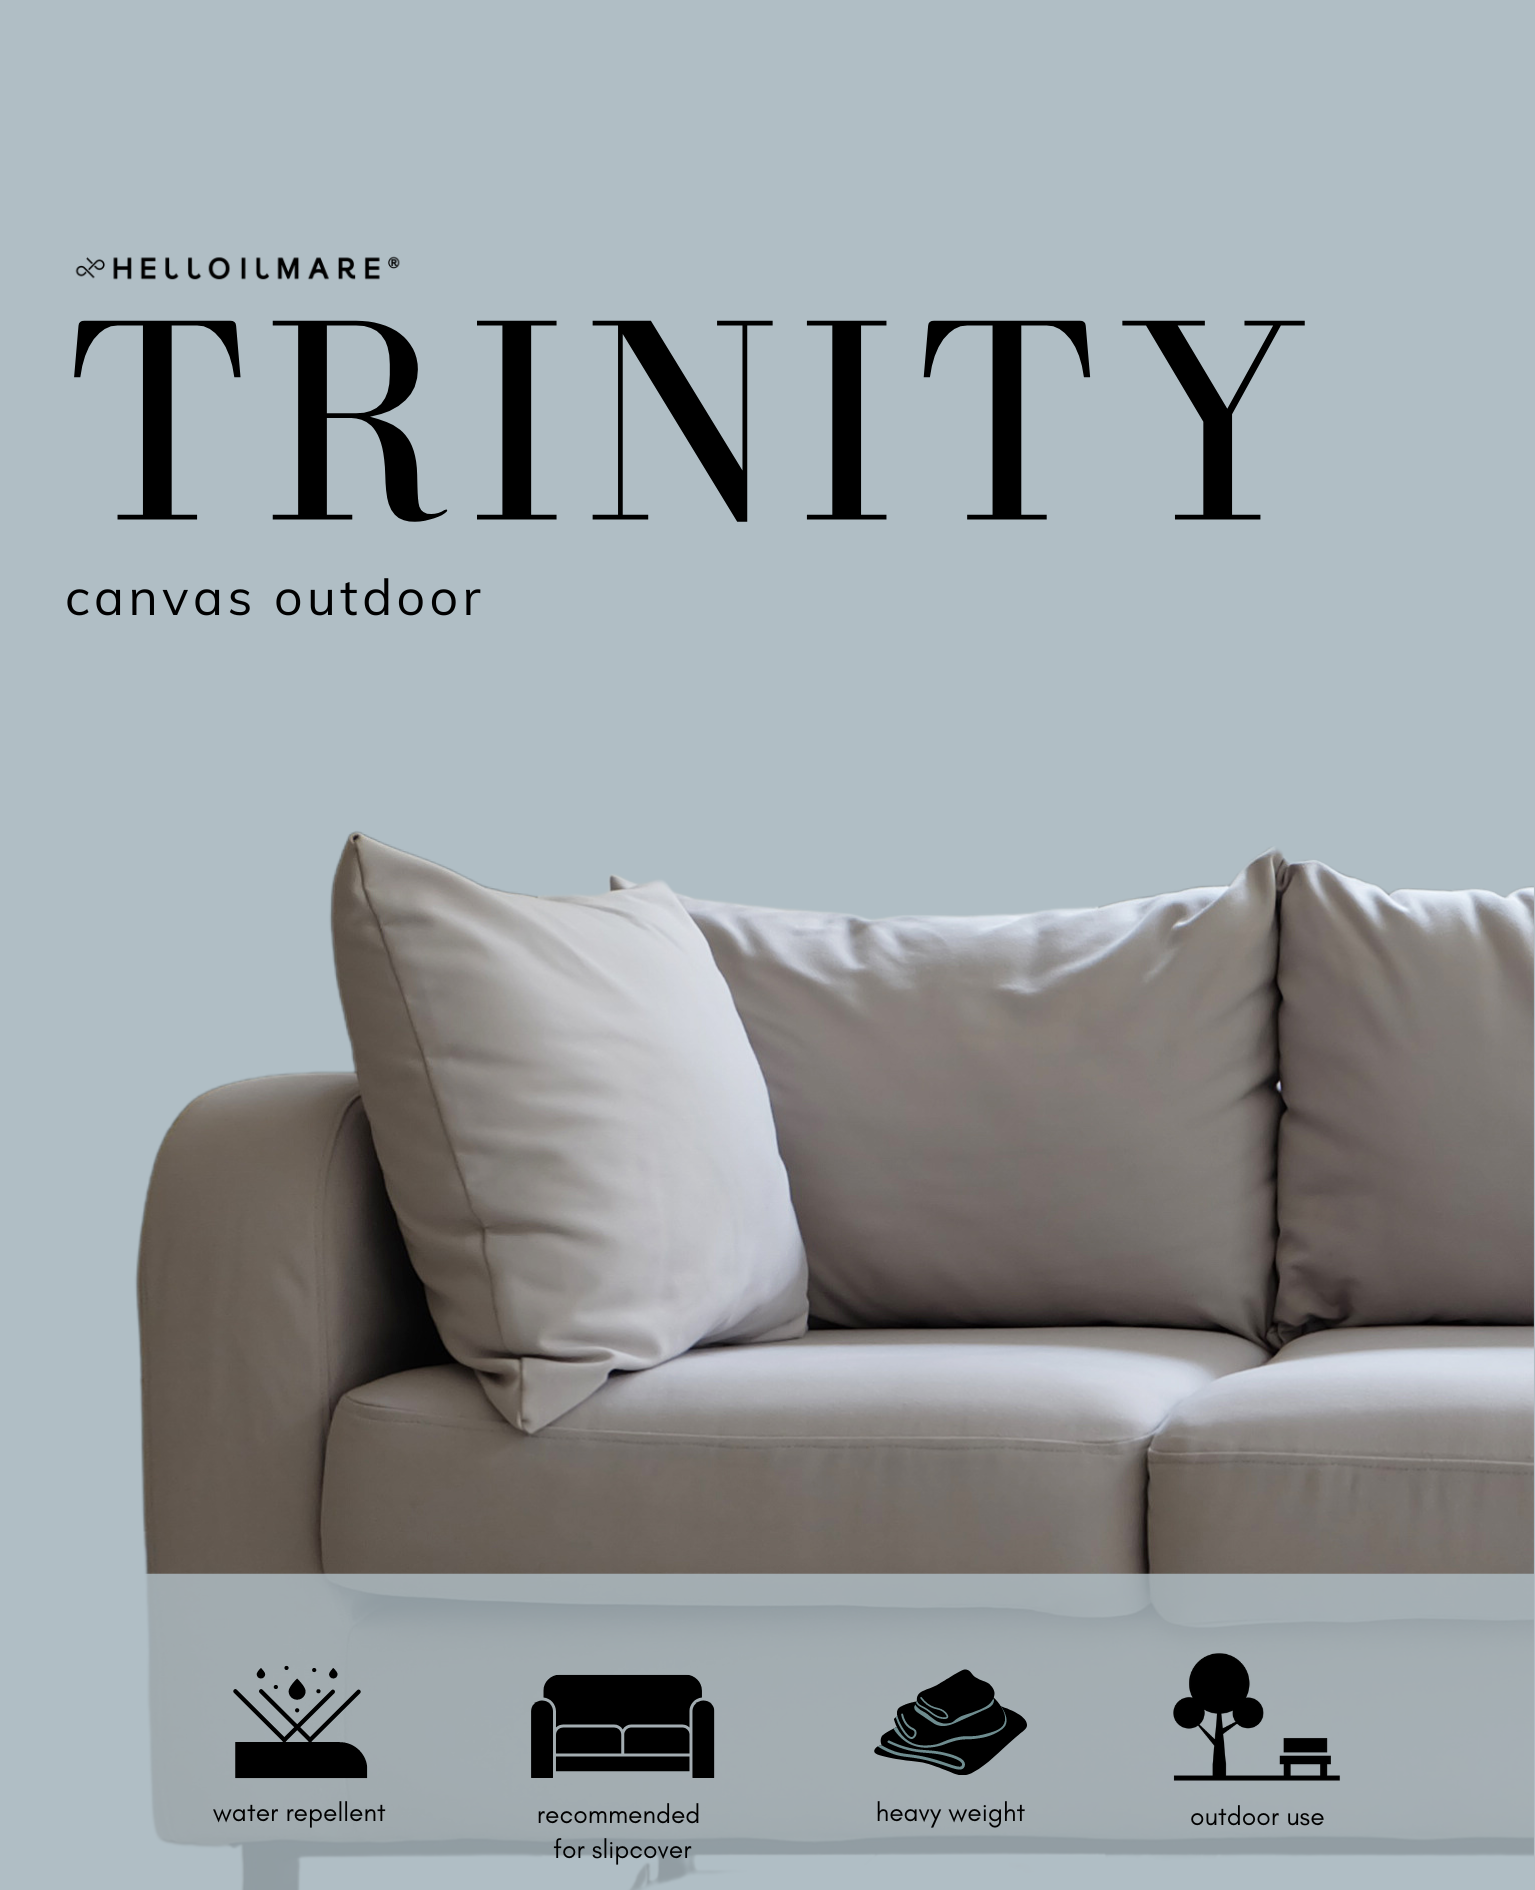 4 Seater Trinity - Helloilmare